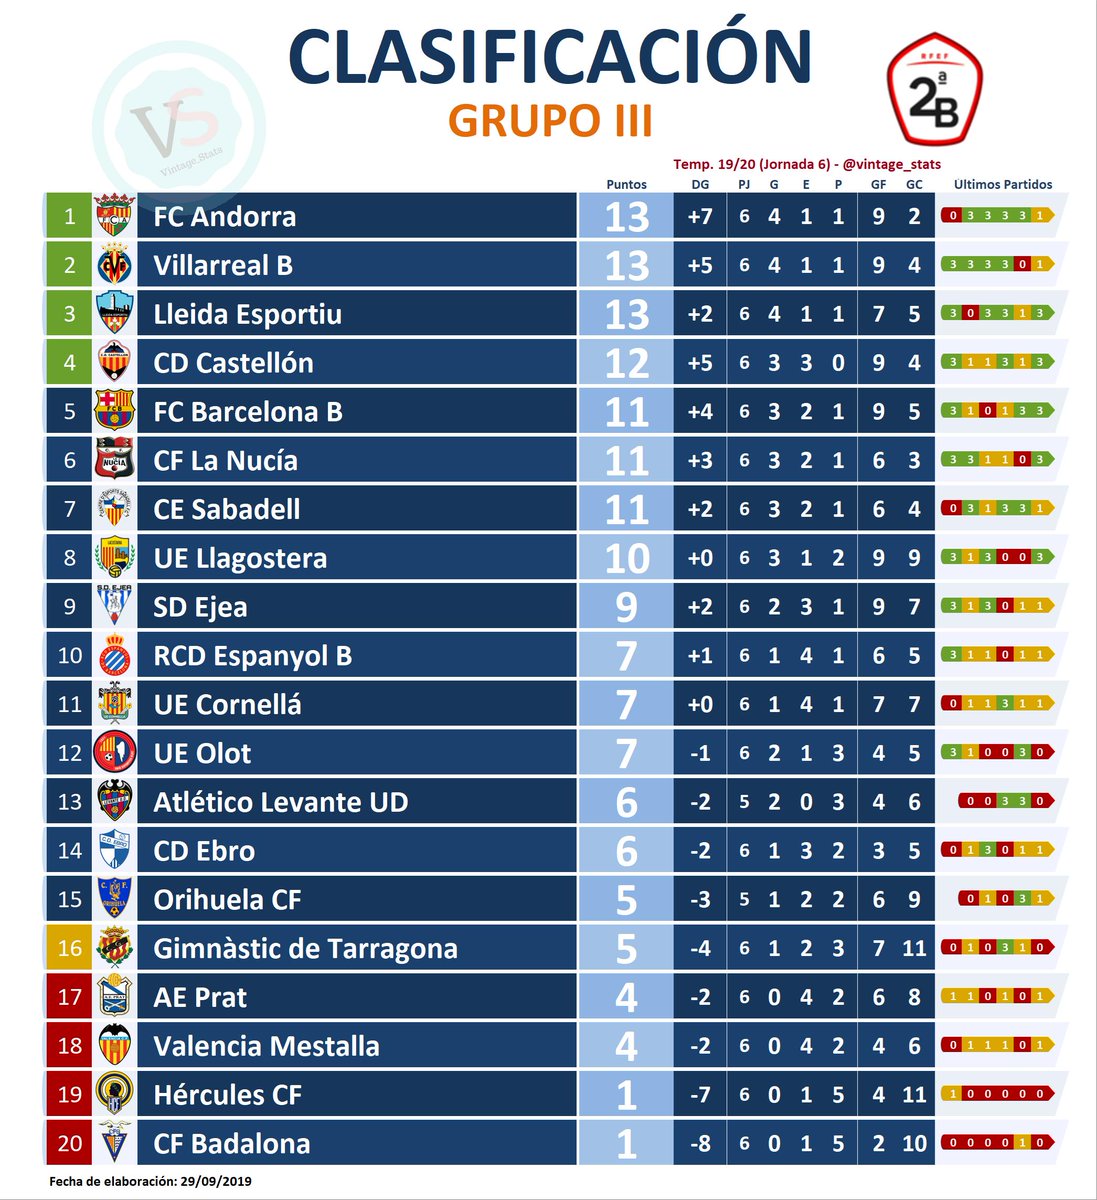 vintage_stats Twitter: "📈 #Ranking #2bg3 6 🔝🔟 CLASIFICACIÓN GRUPO III de [1] @fcandorra [2] @VillarrealCF B [3] @Lleida_Esportiu [4] @CD_Castellon [5] @FCBarcelonaB [6] @cfnucia [7] @CESabadell [8] @UELlagostera [9] @AupaEjea ...